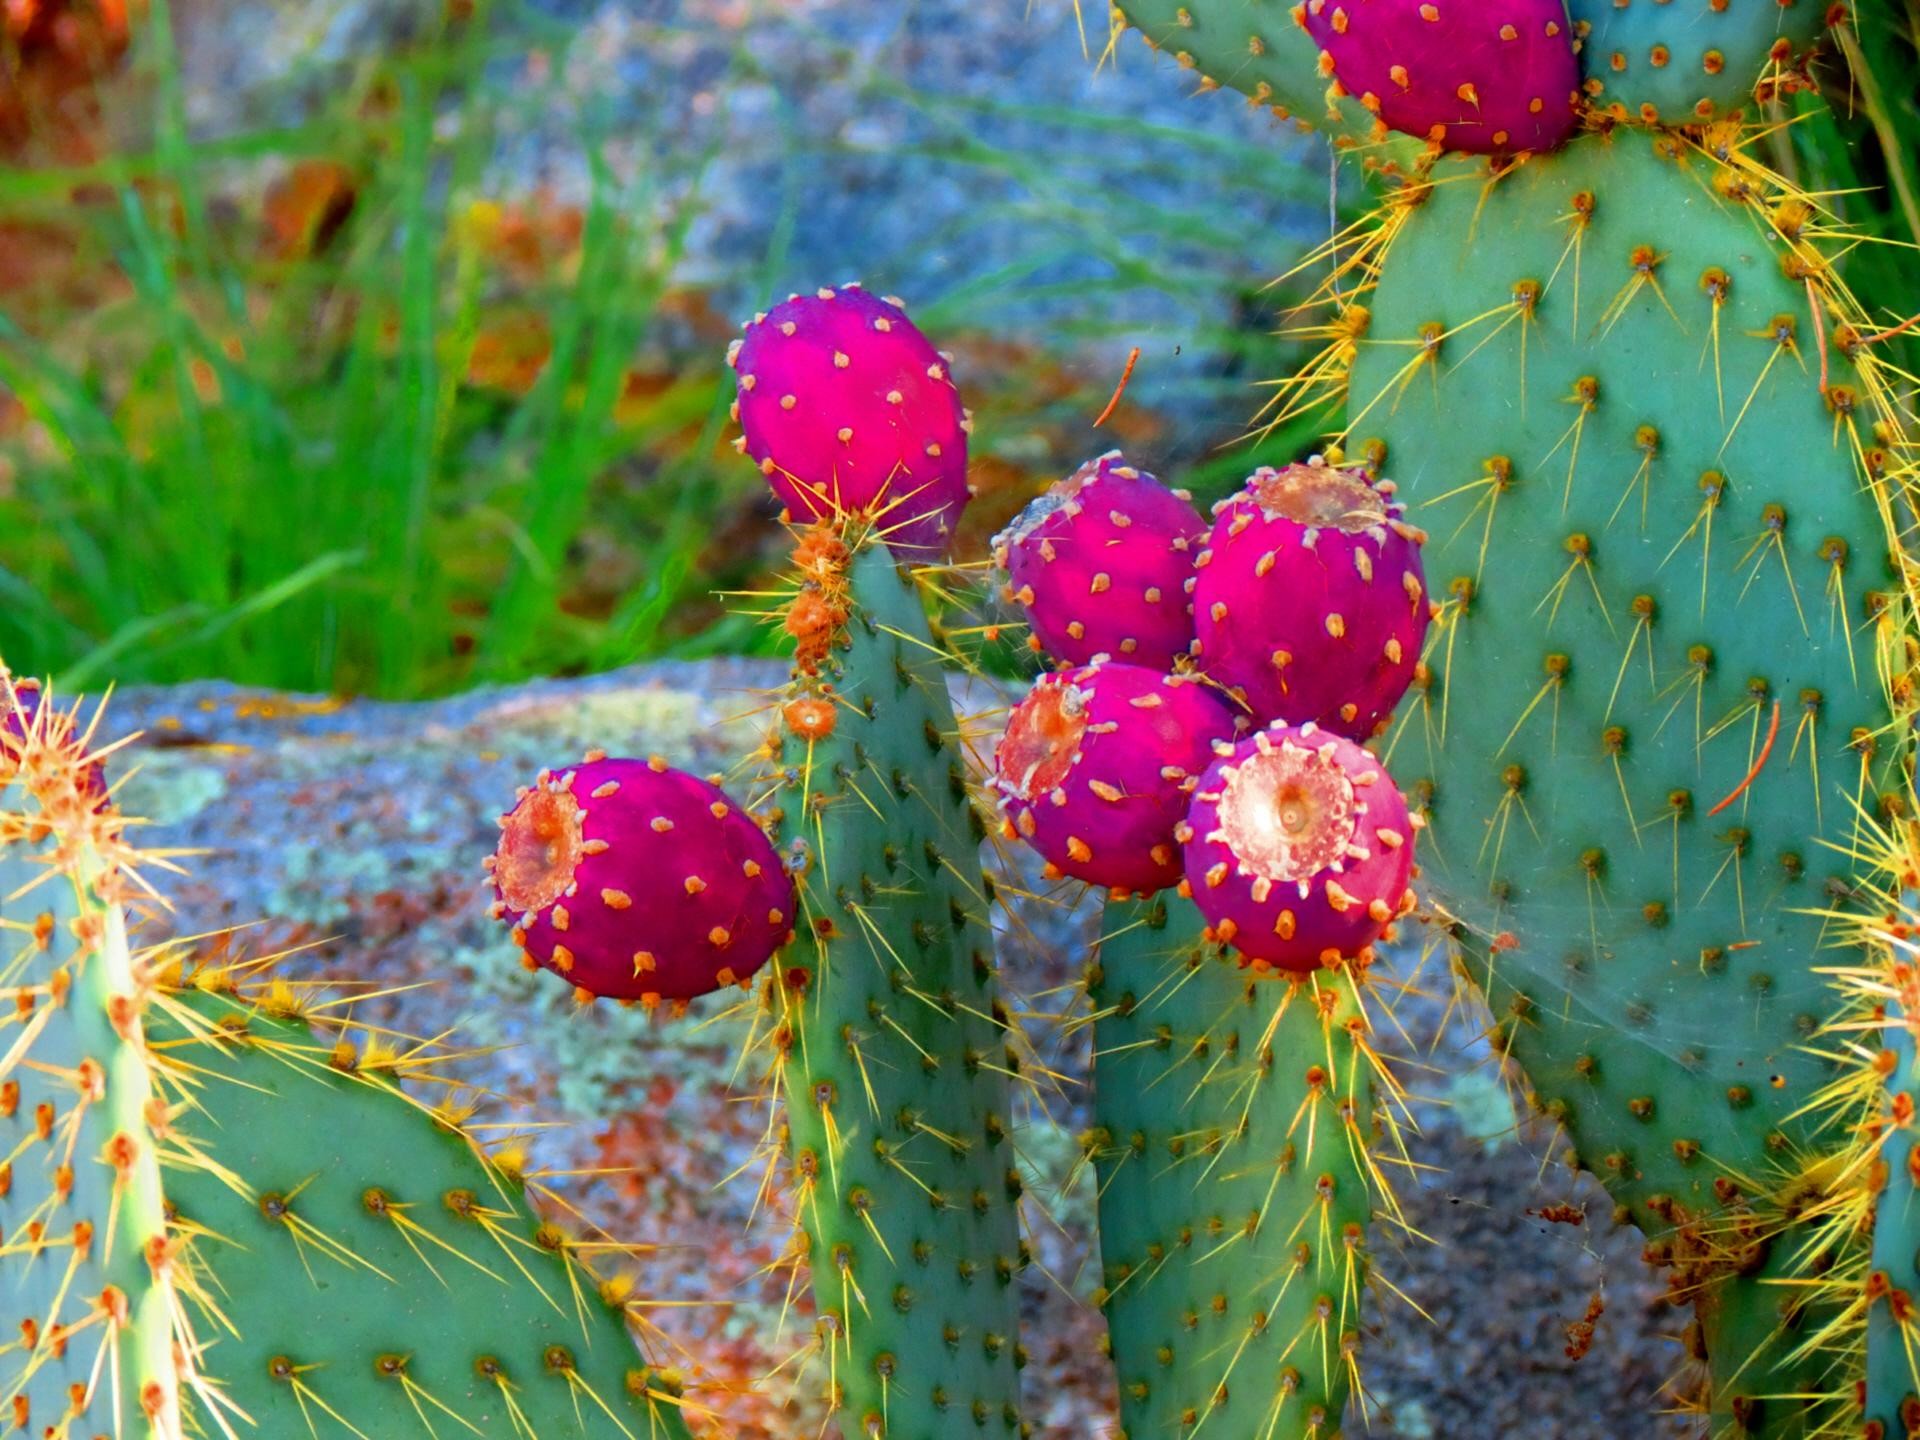 arizona green tea wallpaper,cactus,plant,flower,thorns, spines